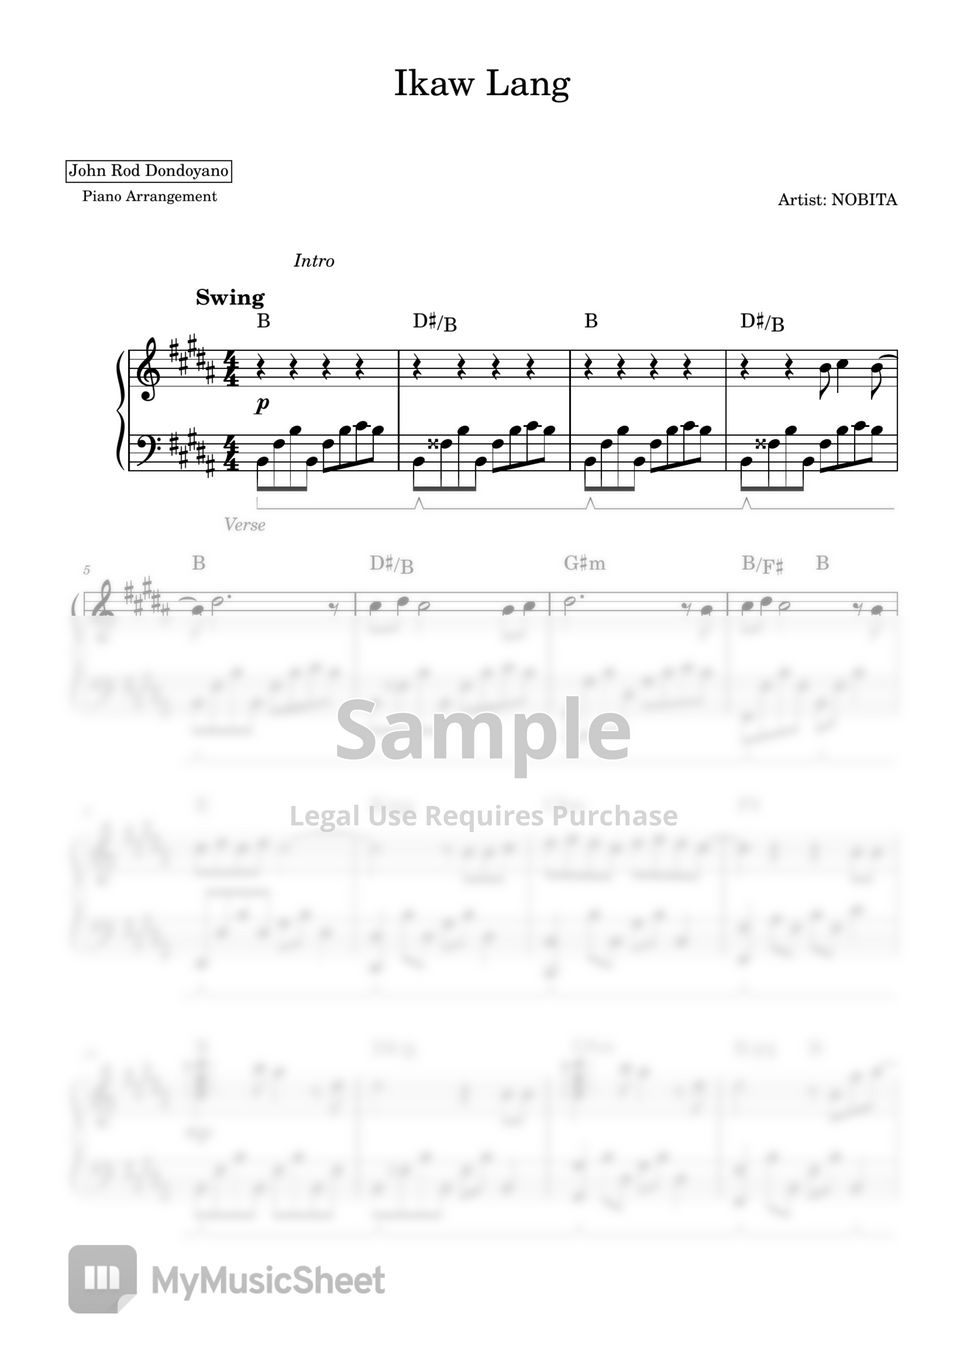 NOBITA - Ikaw Lang (PIANO SHEET) by John Rod Dondoyano